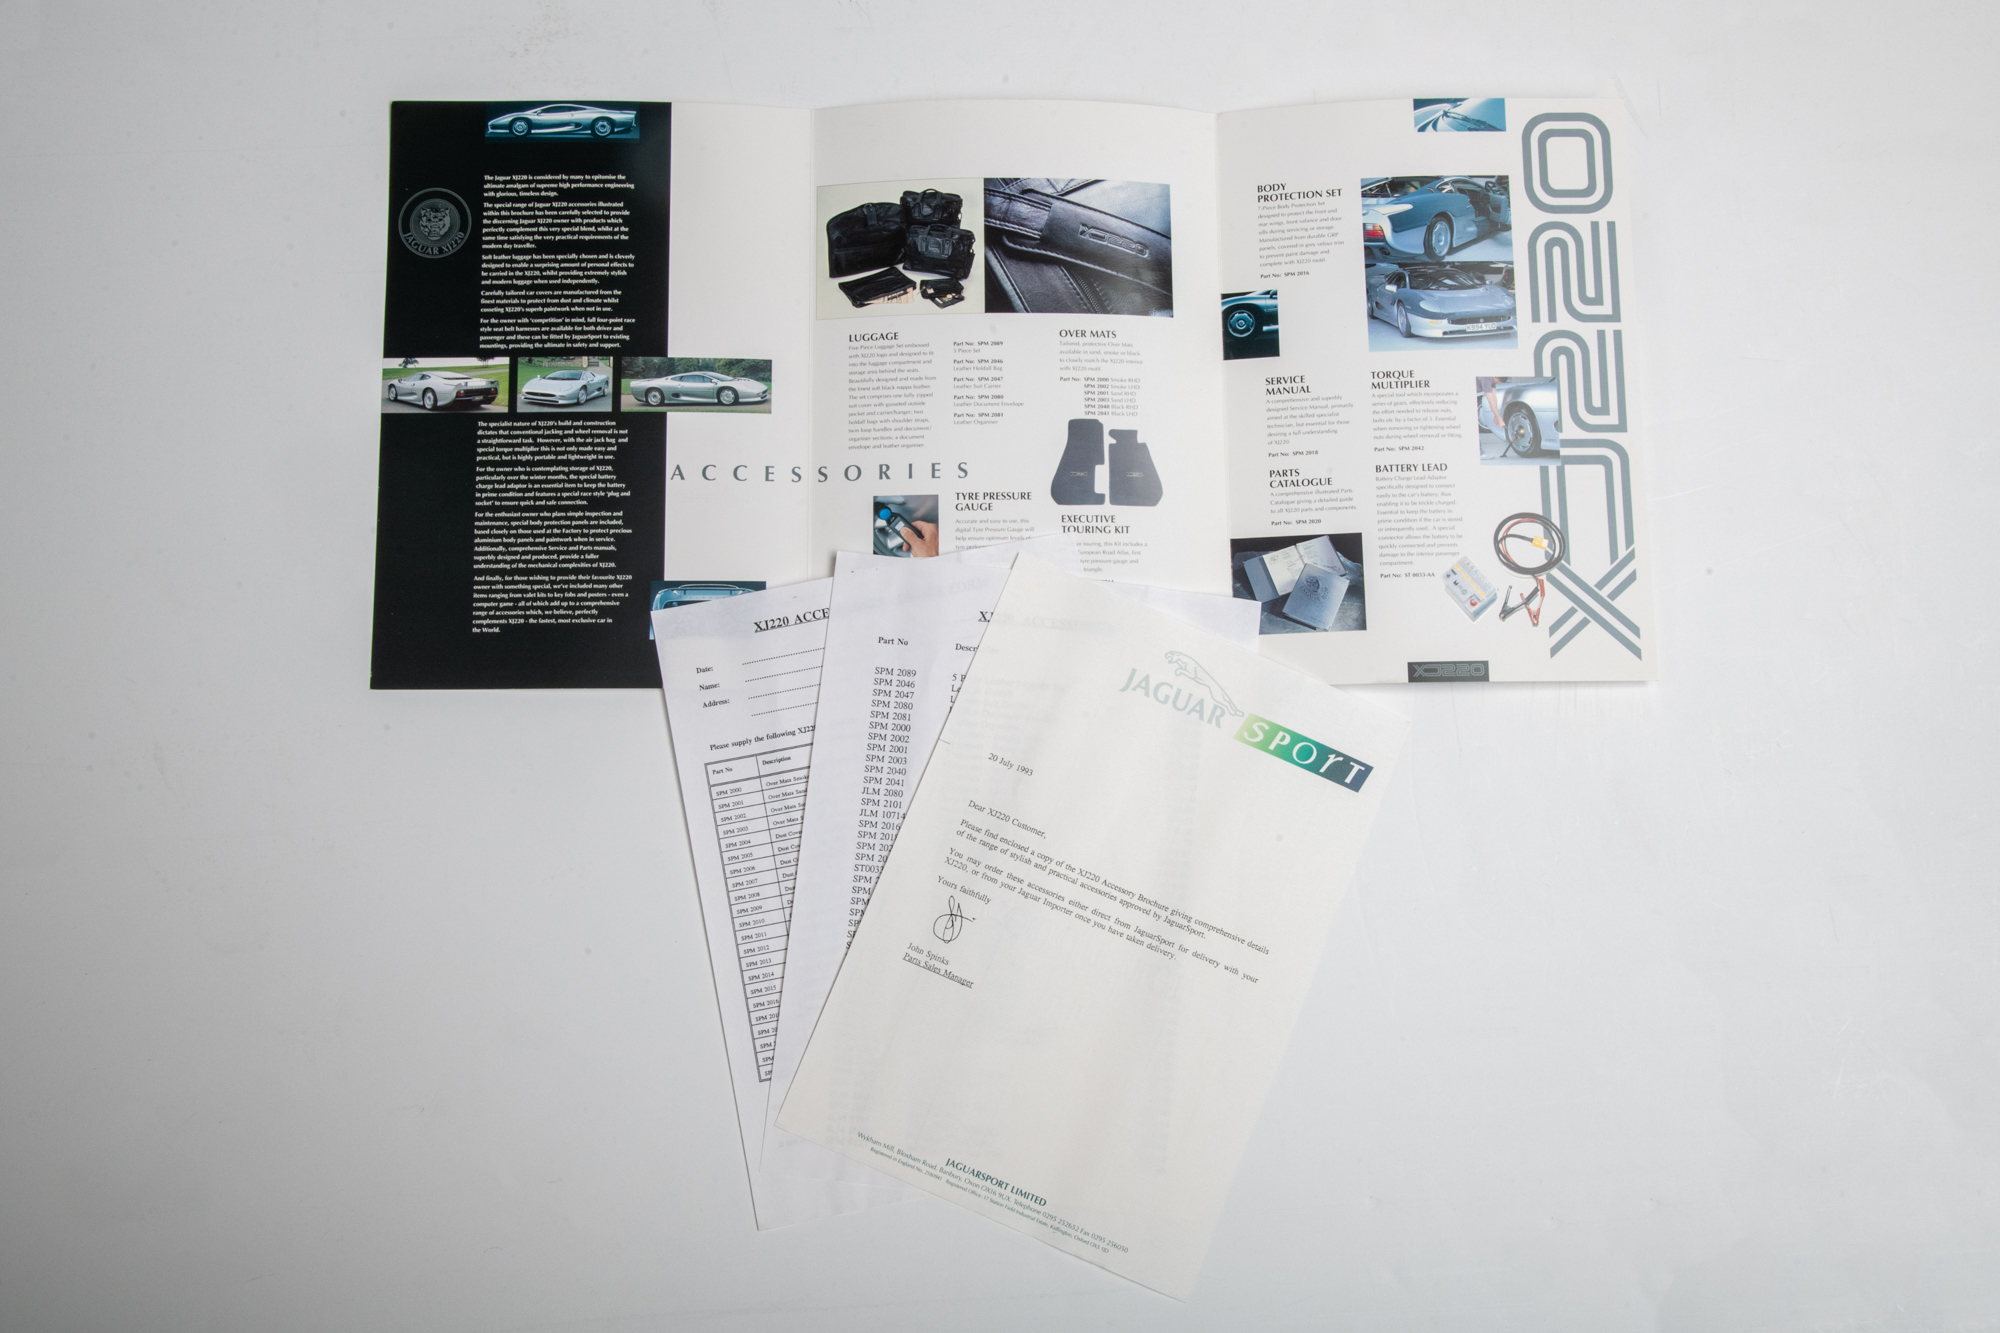 Jaguar XJ220 documents